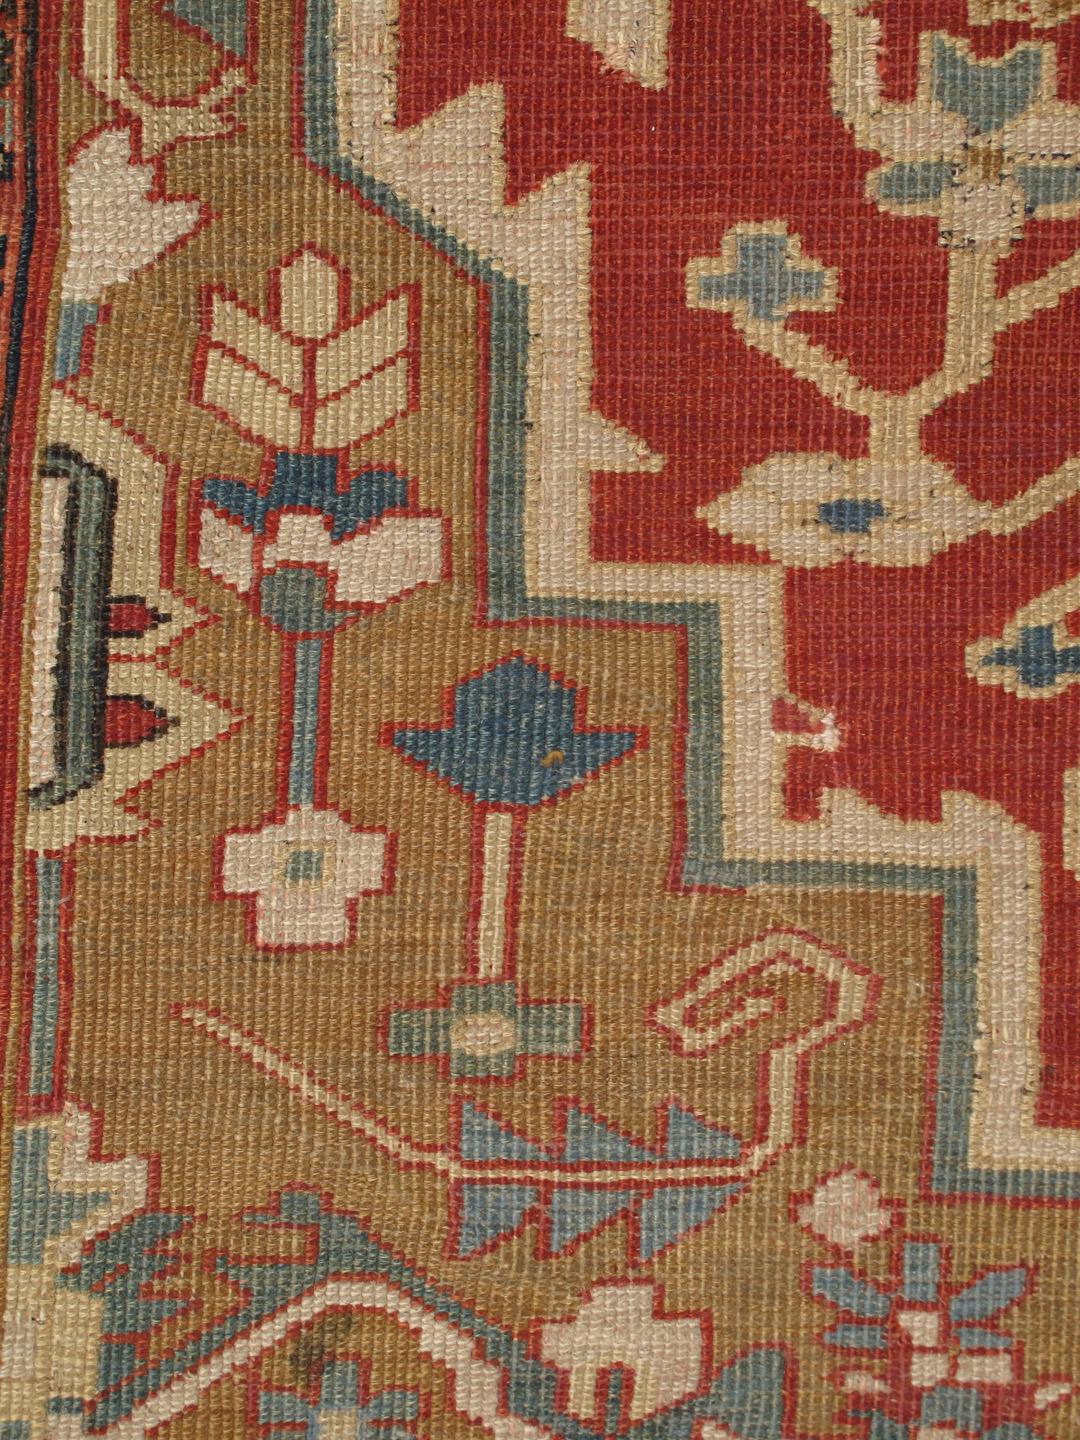 Antique Persian Serapi/Bakhshaiesh Rug in Brick Red, Light Blue & Camel Colors 4